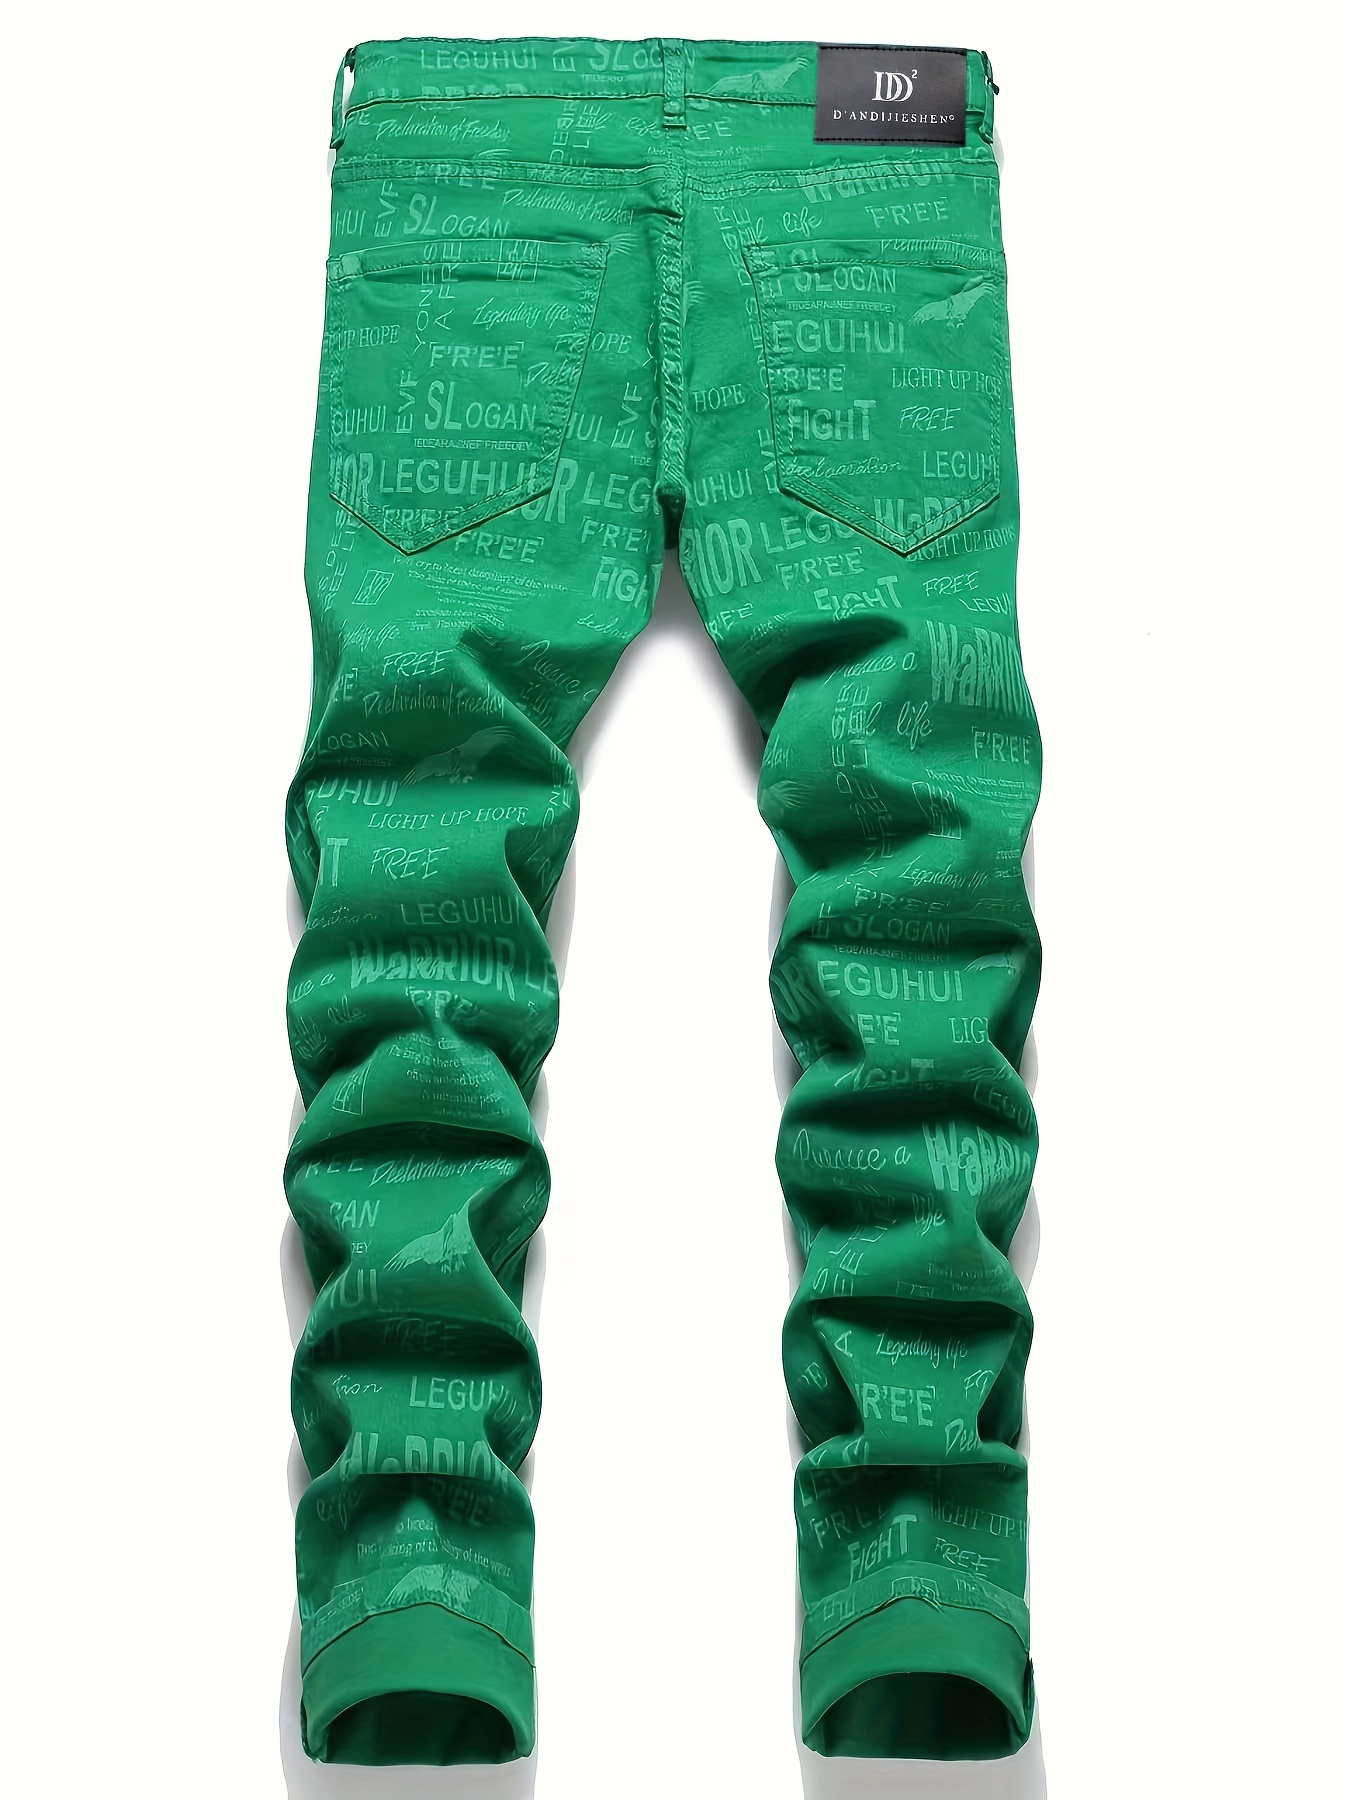 Men's Dark Green denim jeans